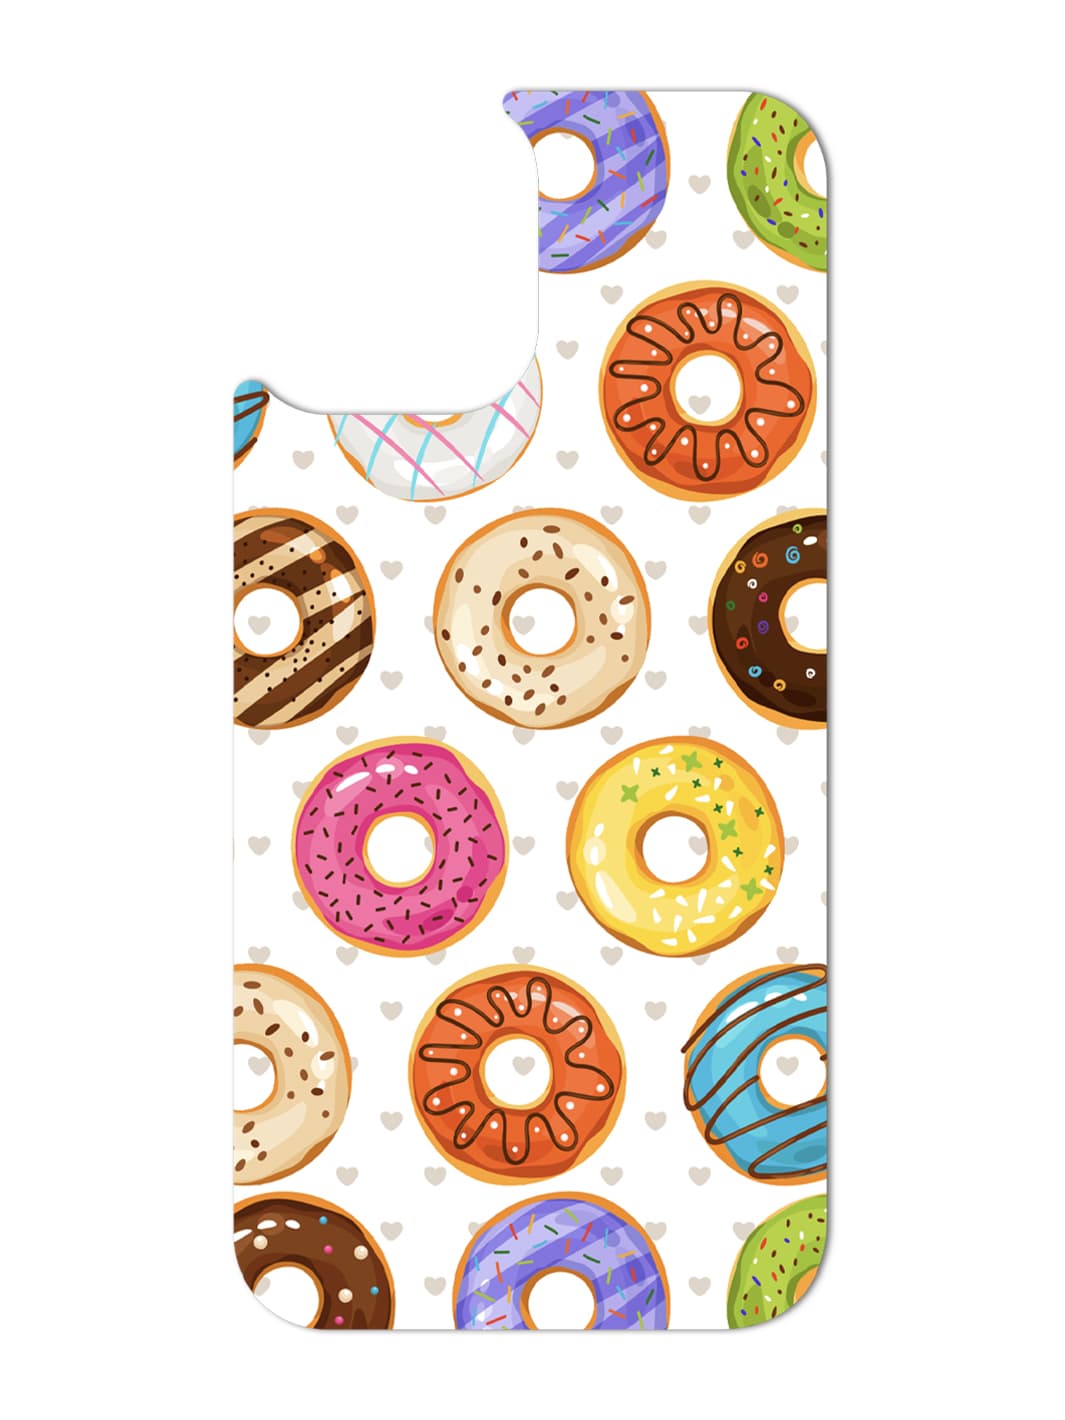 Phone Case Set - Donuts